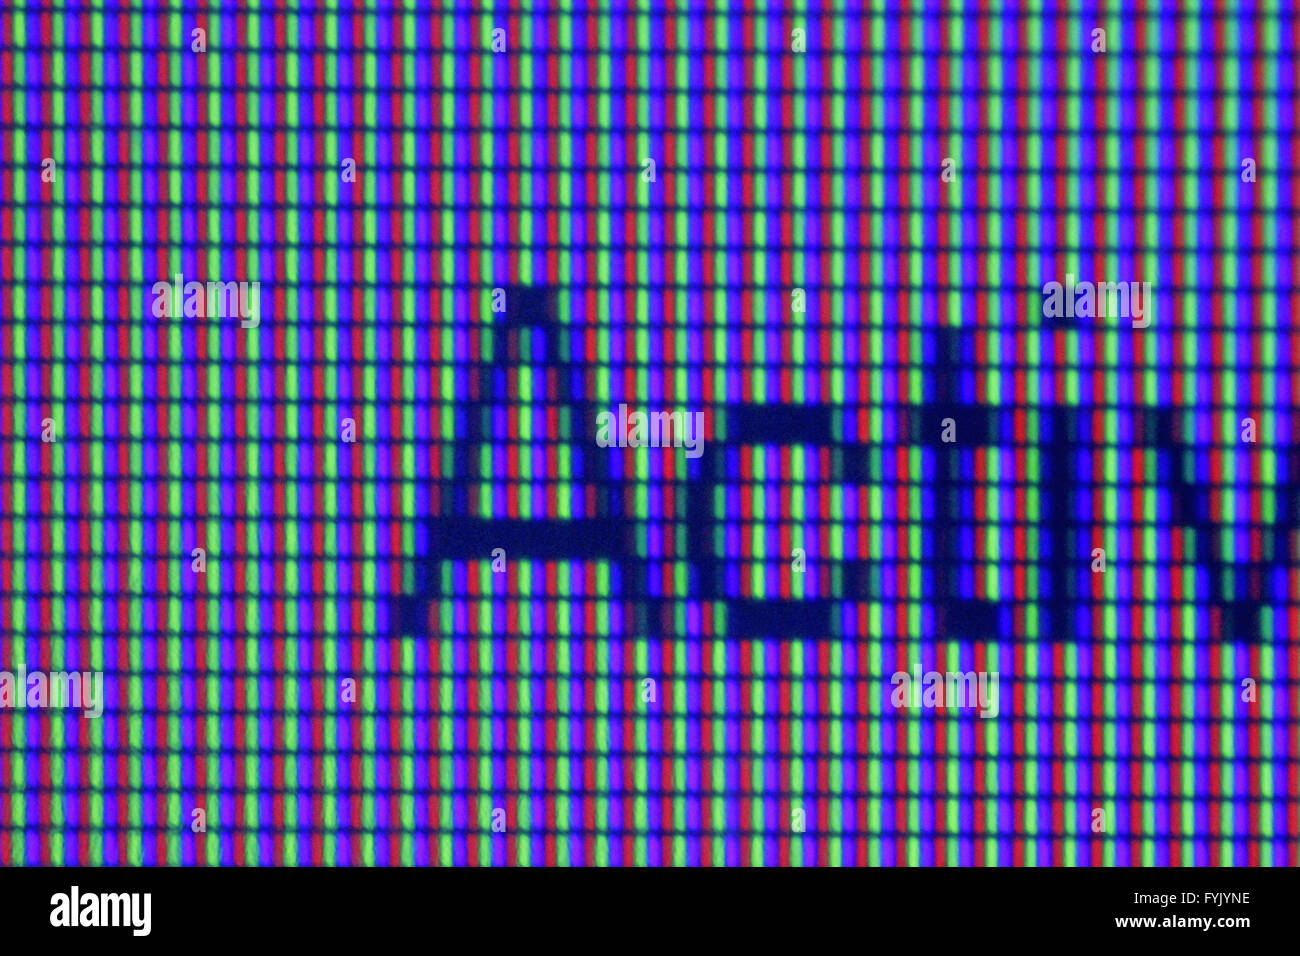 LED Screen close-up Stock Photo - Alamy